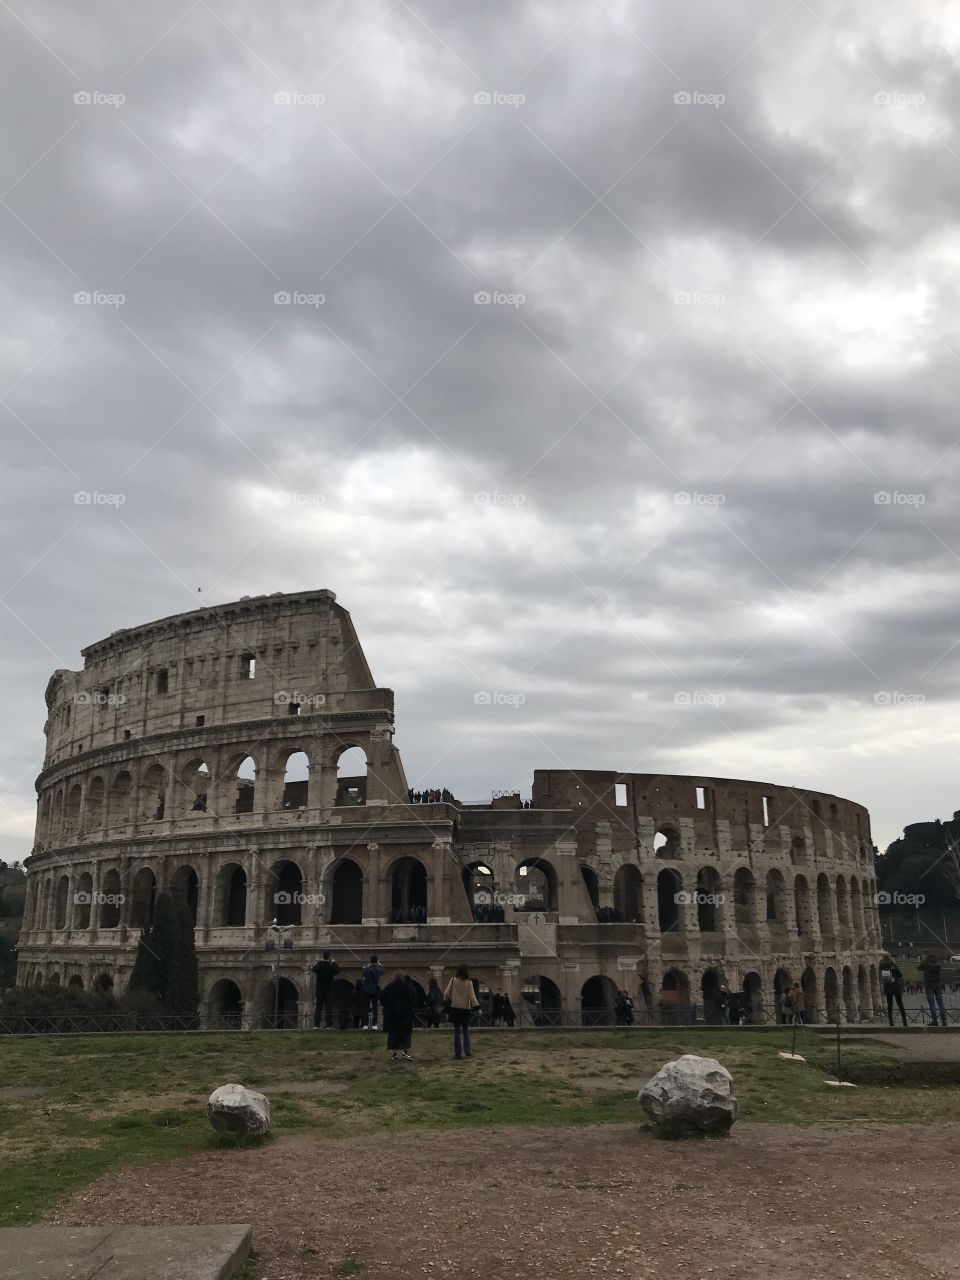 Colosseum #1

Rome, Italy